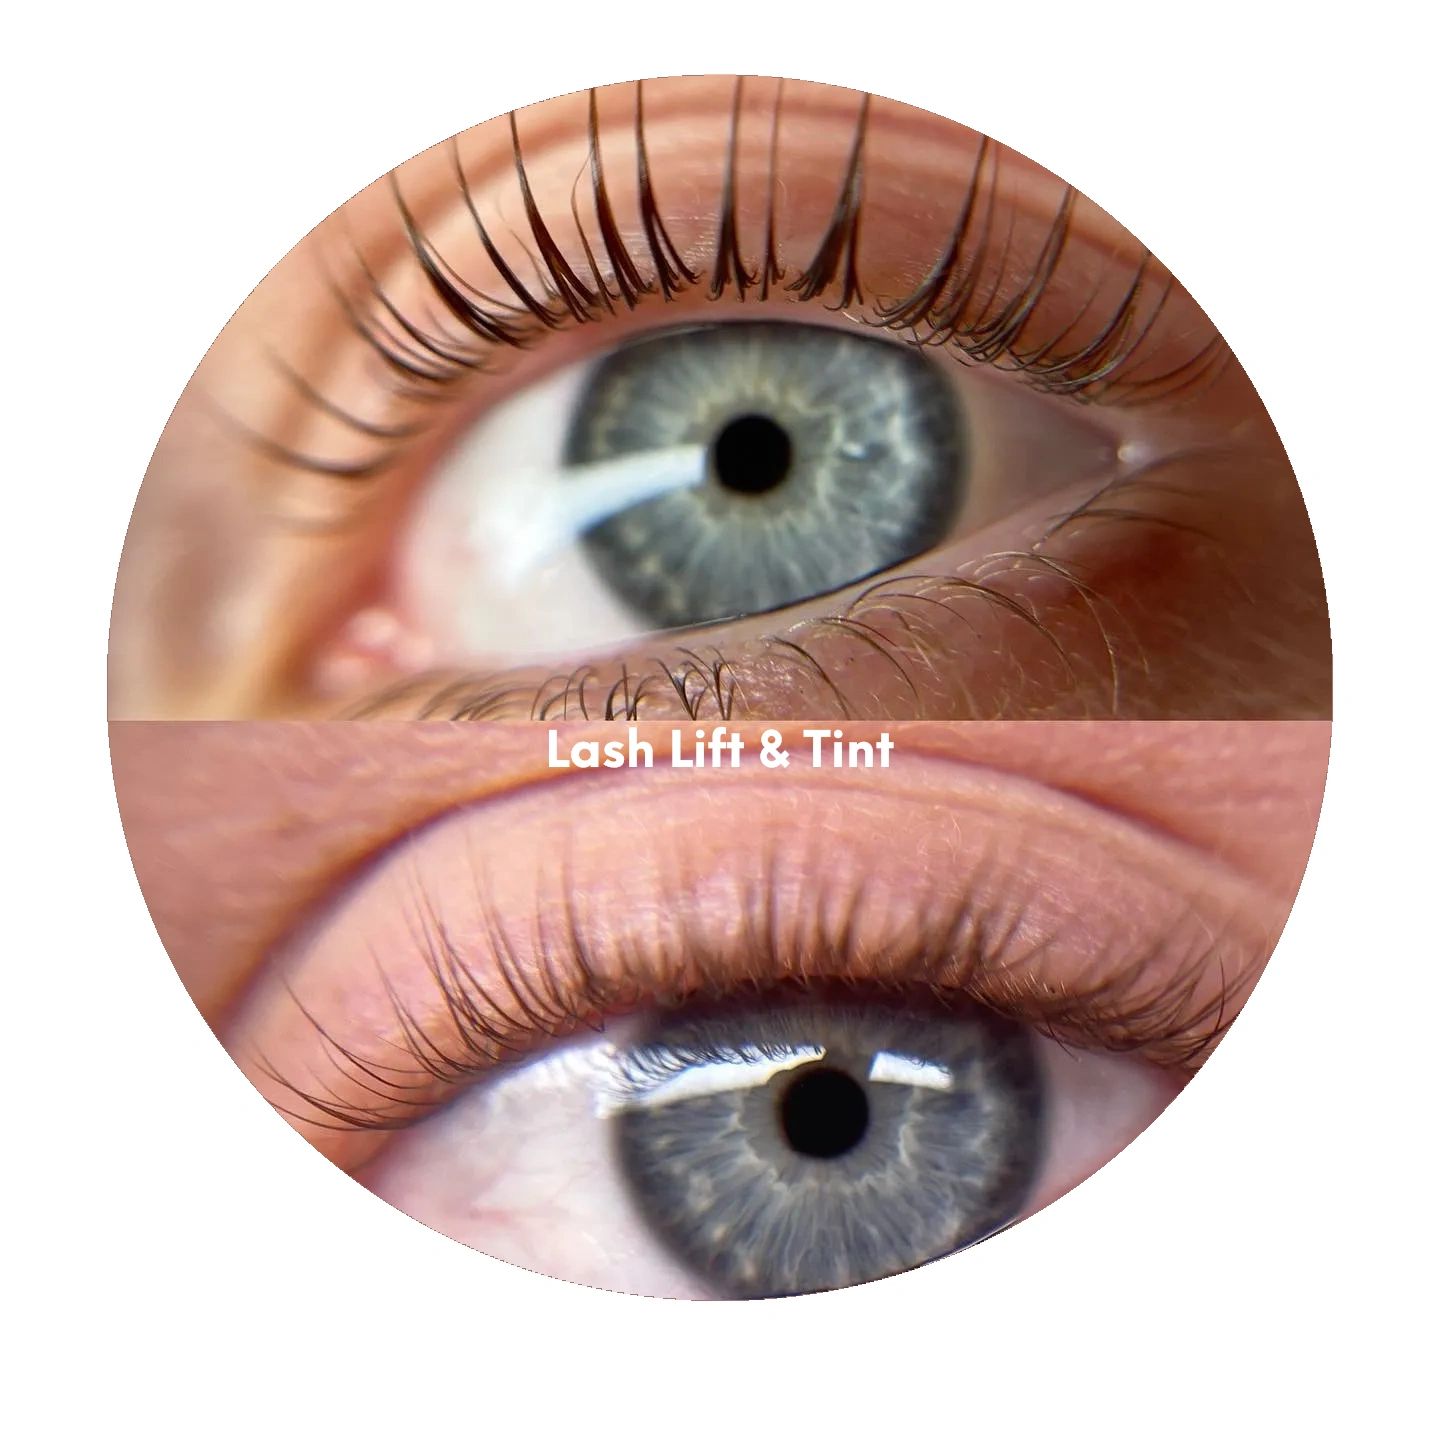 Lash Lift & Tint
An eyelash lift and tint is a two-step beauty treatment that enhances the appearanc